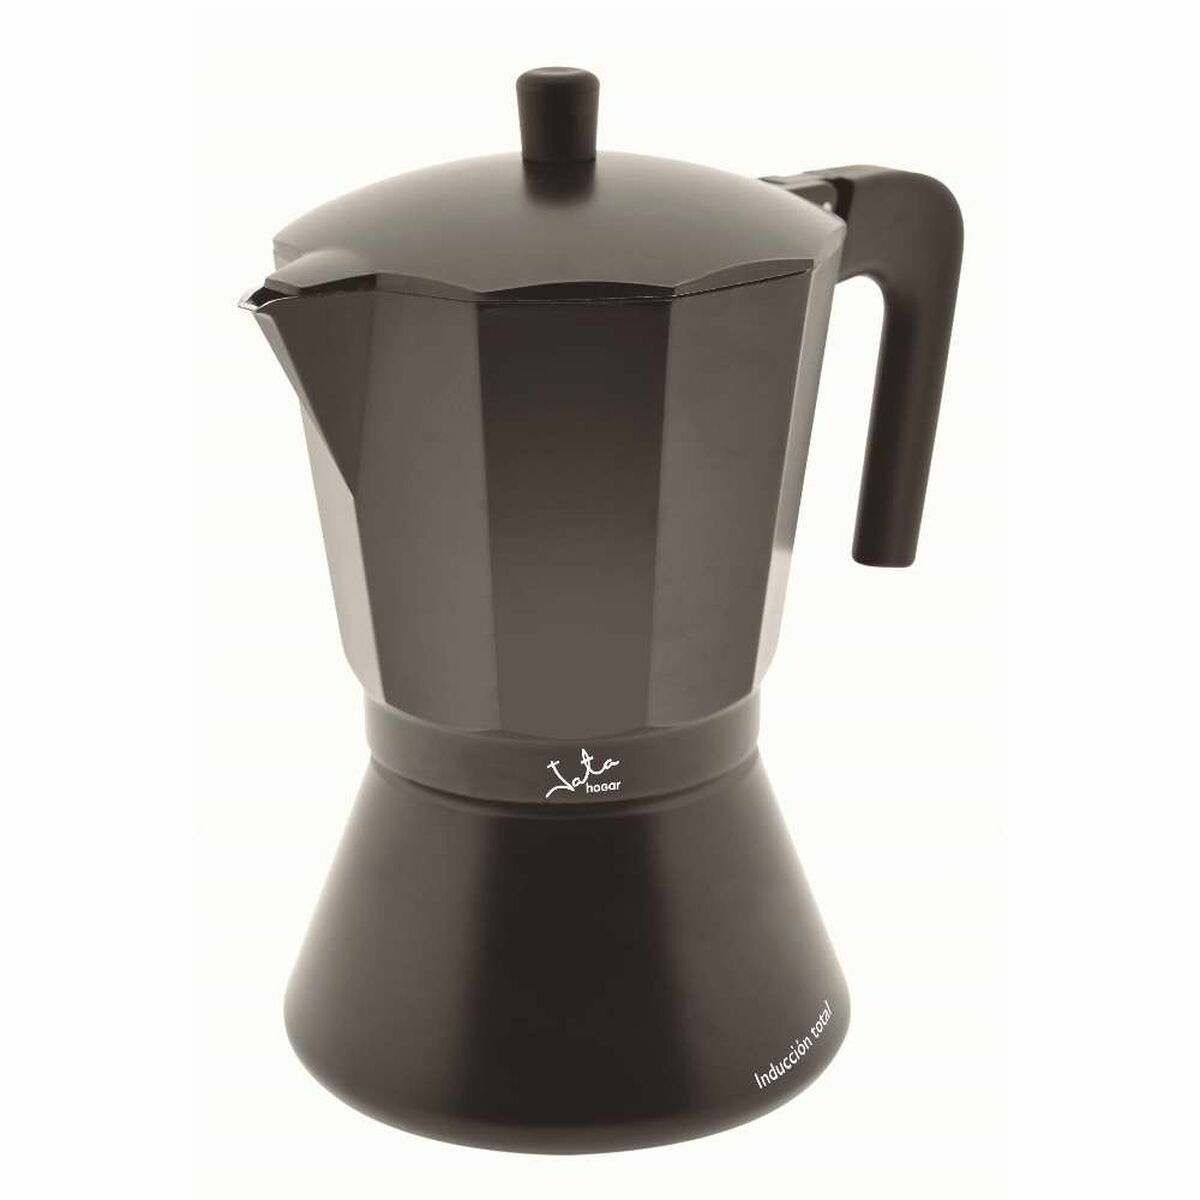 JATA CFI12 italienische Kaffeemaschine für 12 Tassen aus Aluminium